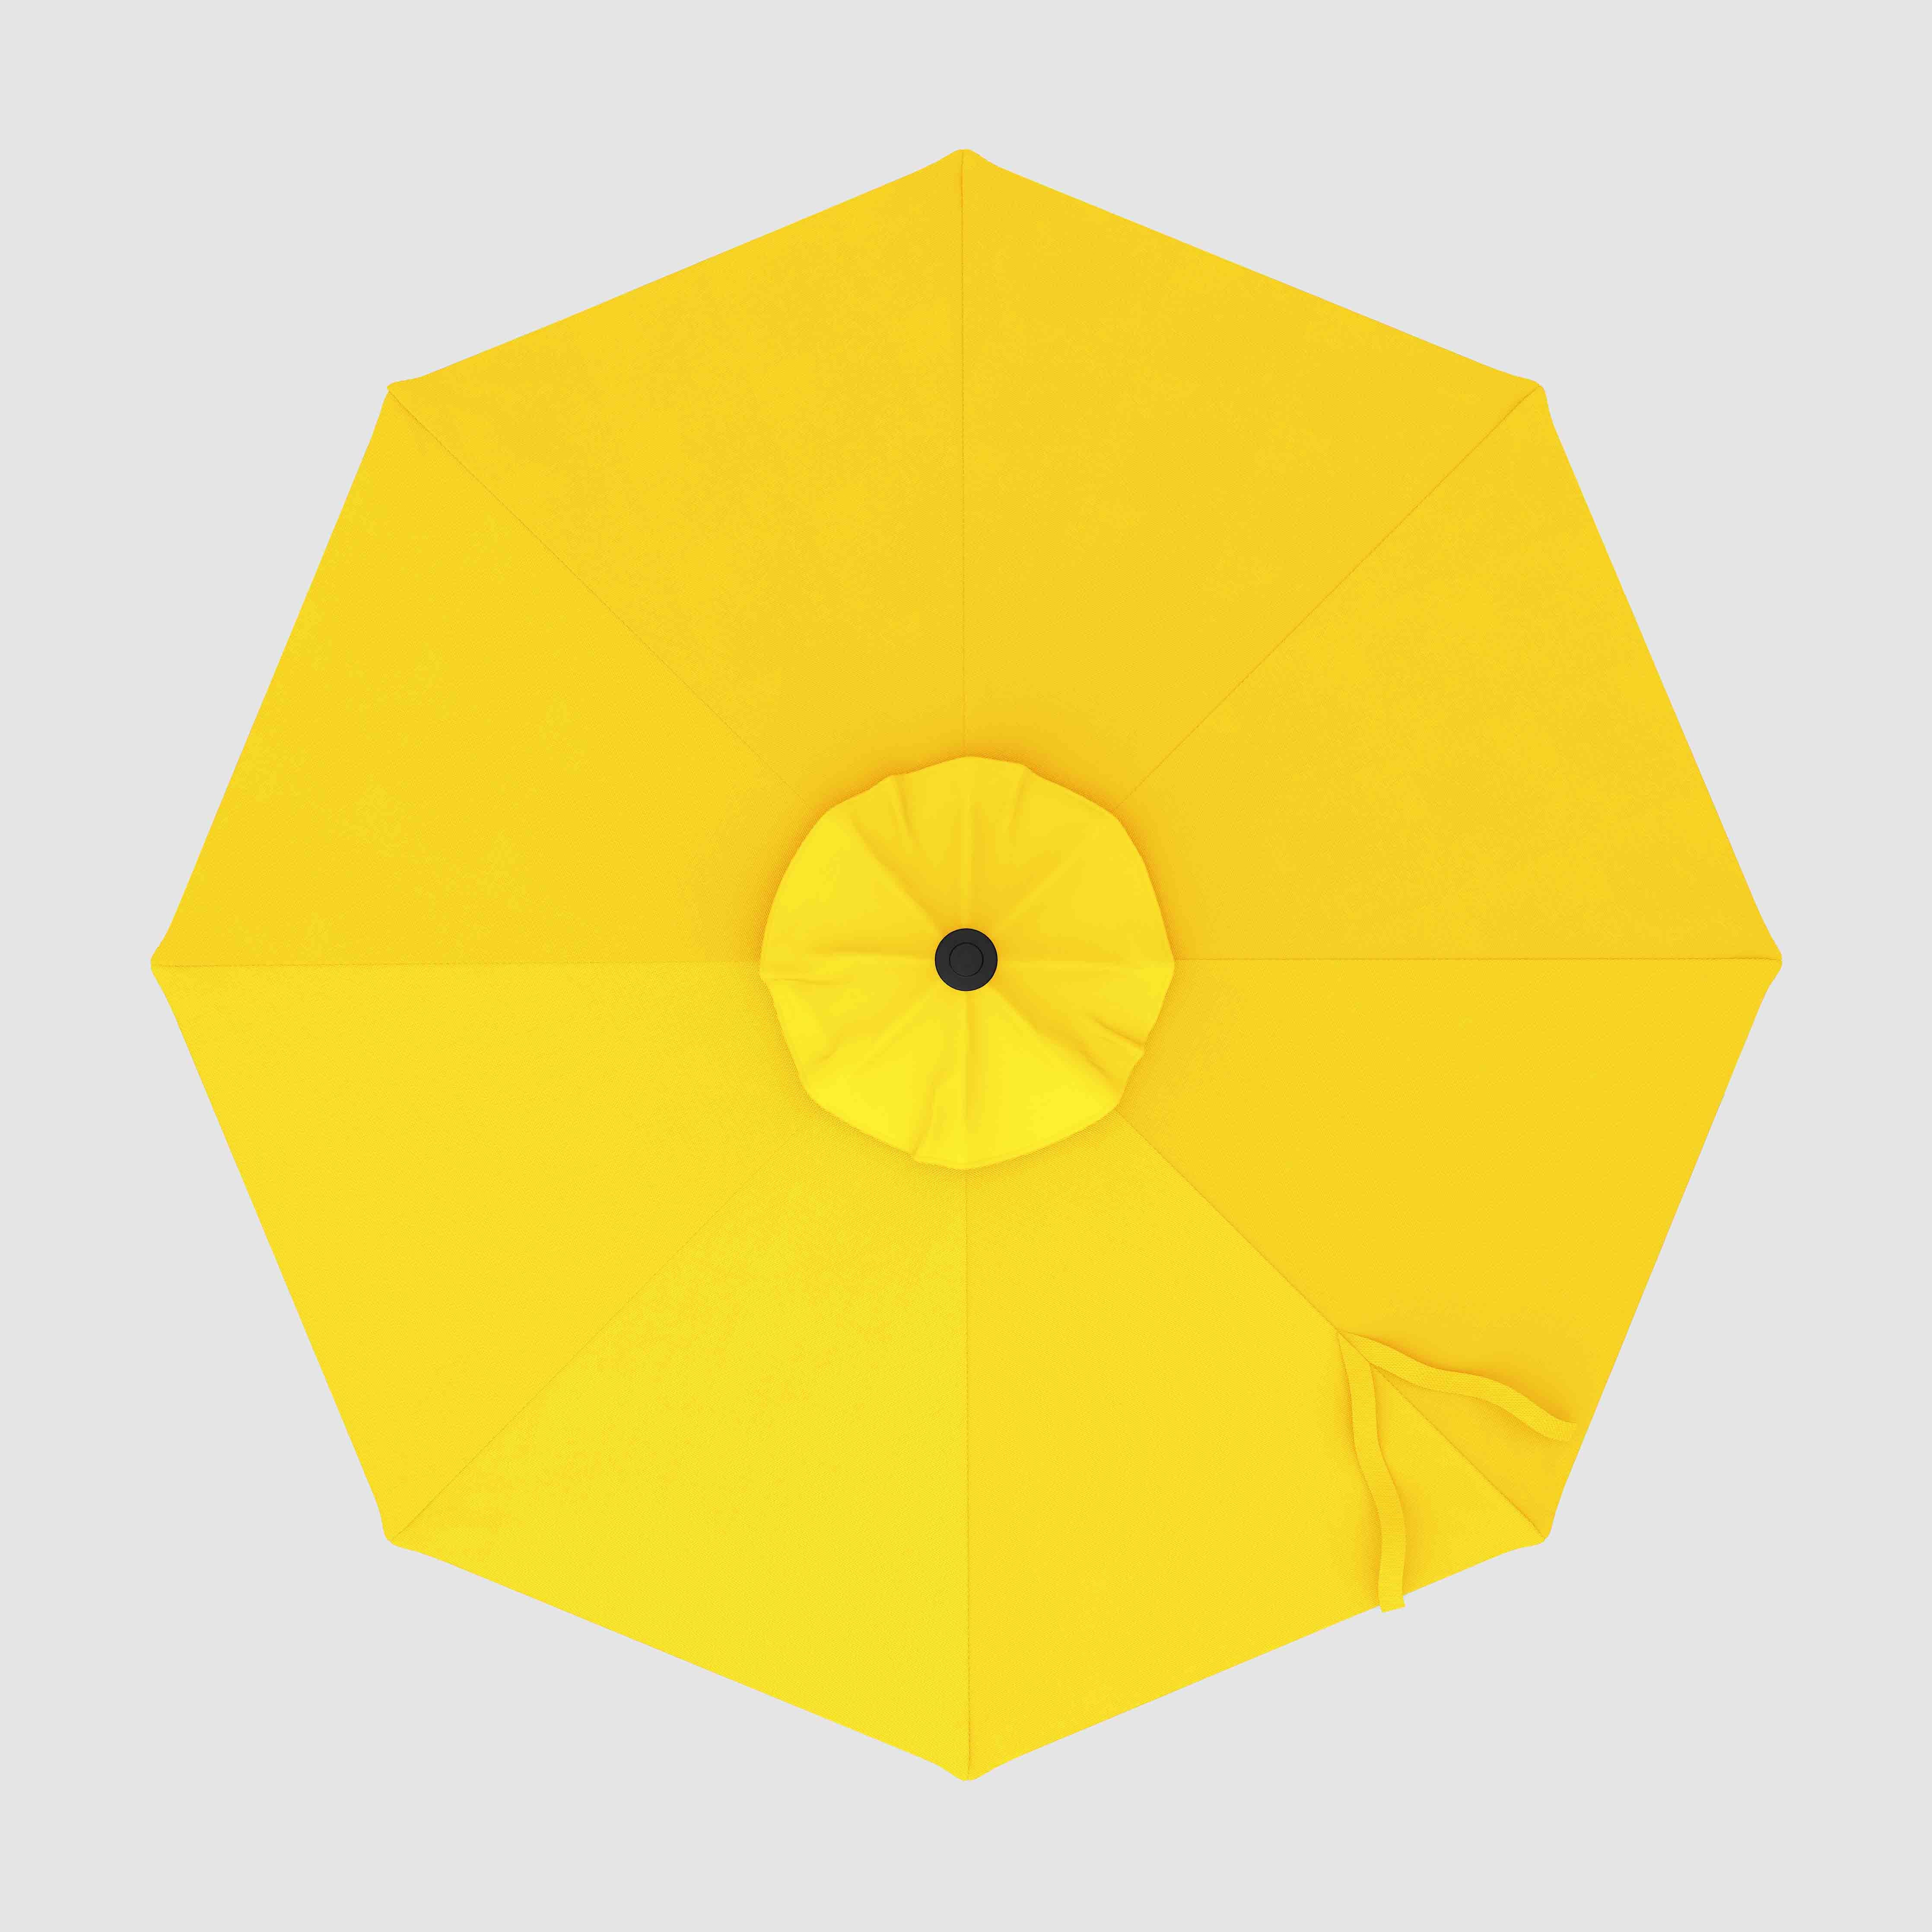 The Lean™ - Sunbrella Yellow